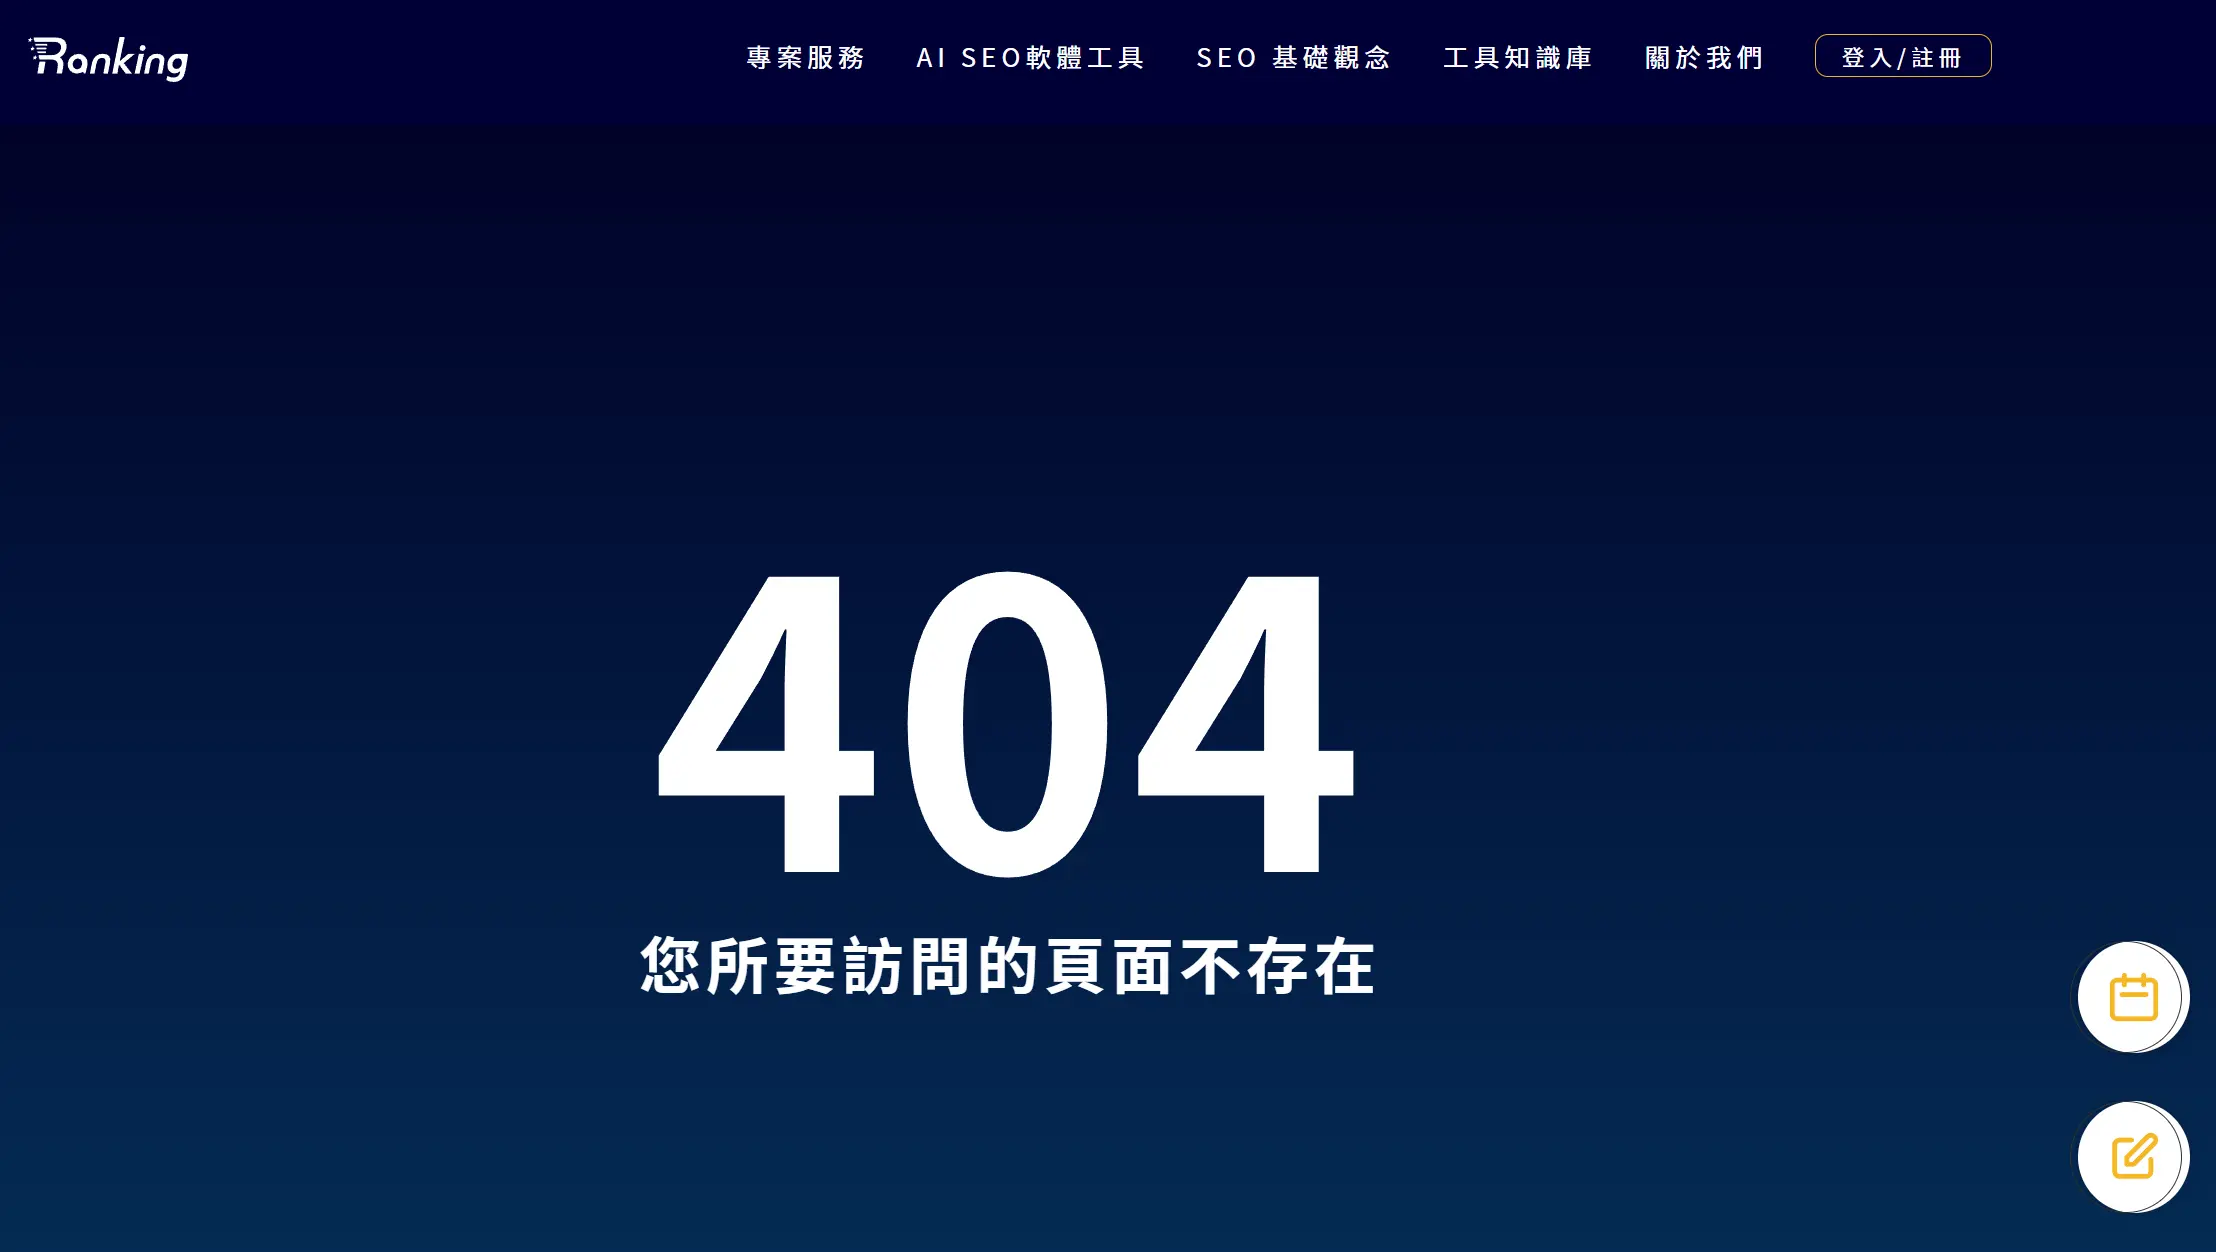 404 not found 網頁示意圖